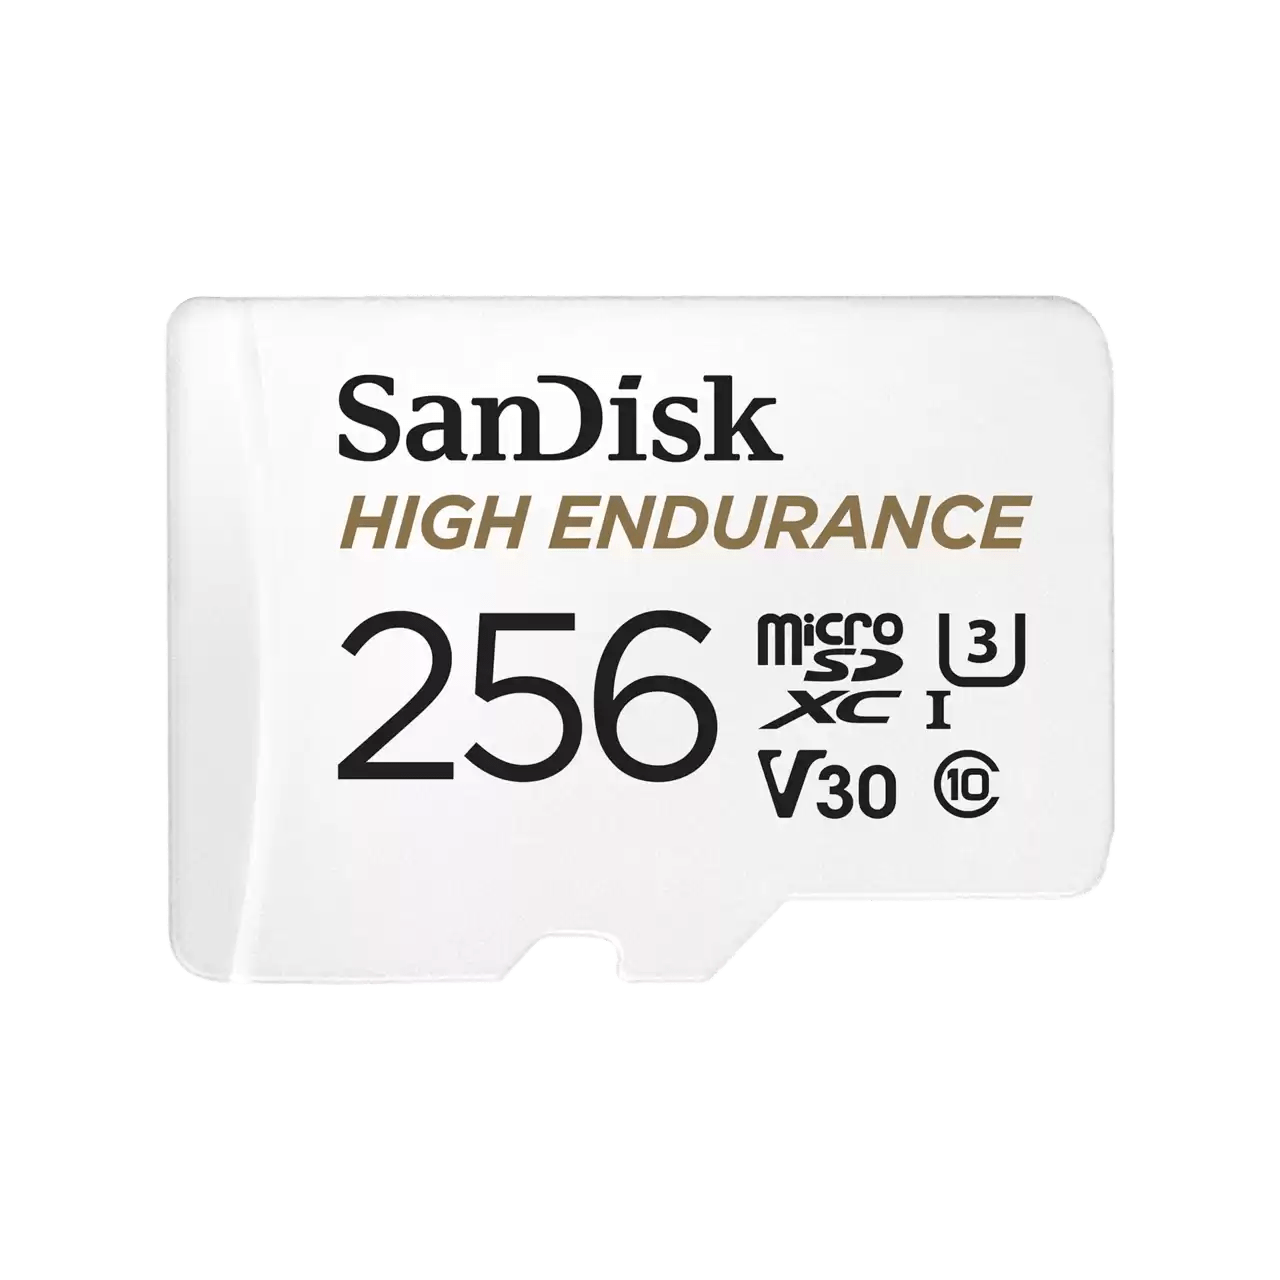 SanDisk High Endurance 256GB V30 U3 C10 UHS - I microSDXC 記憶卡 (SDSQQNR - 256G - GN6IA) - Fever Electrics 電器熱網購平台